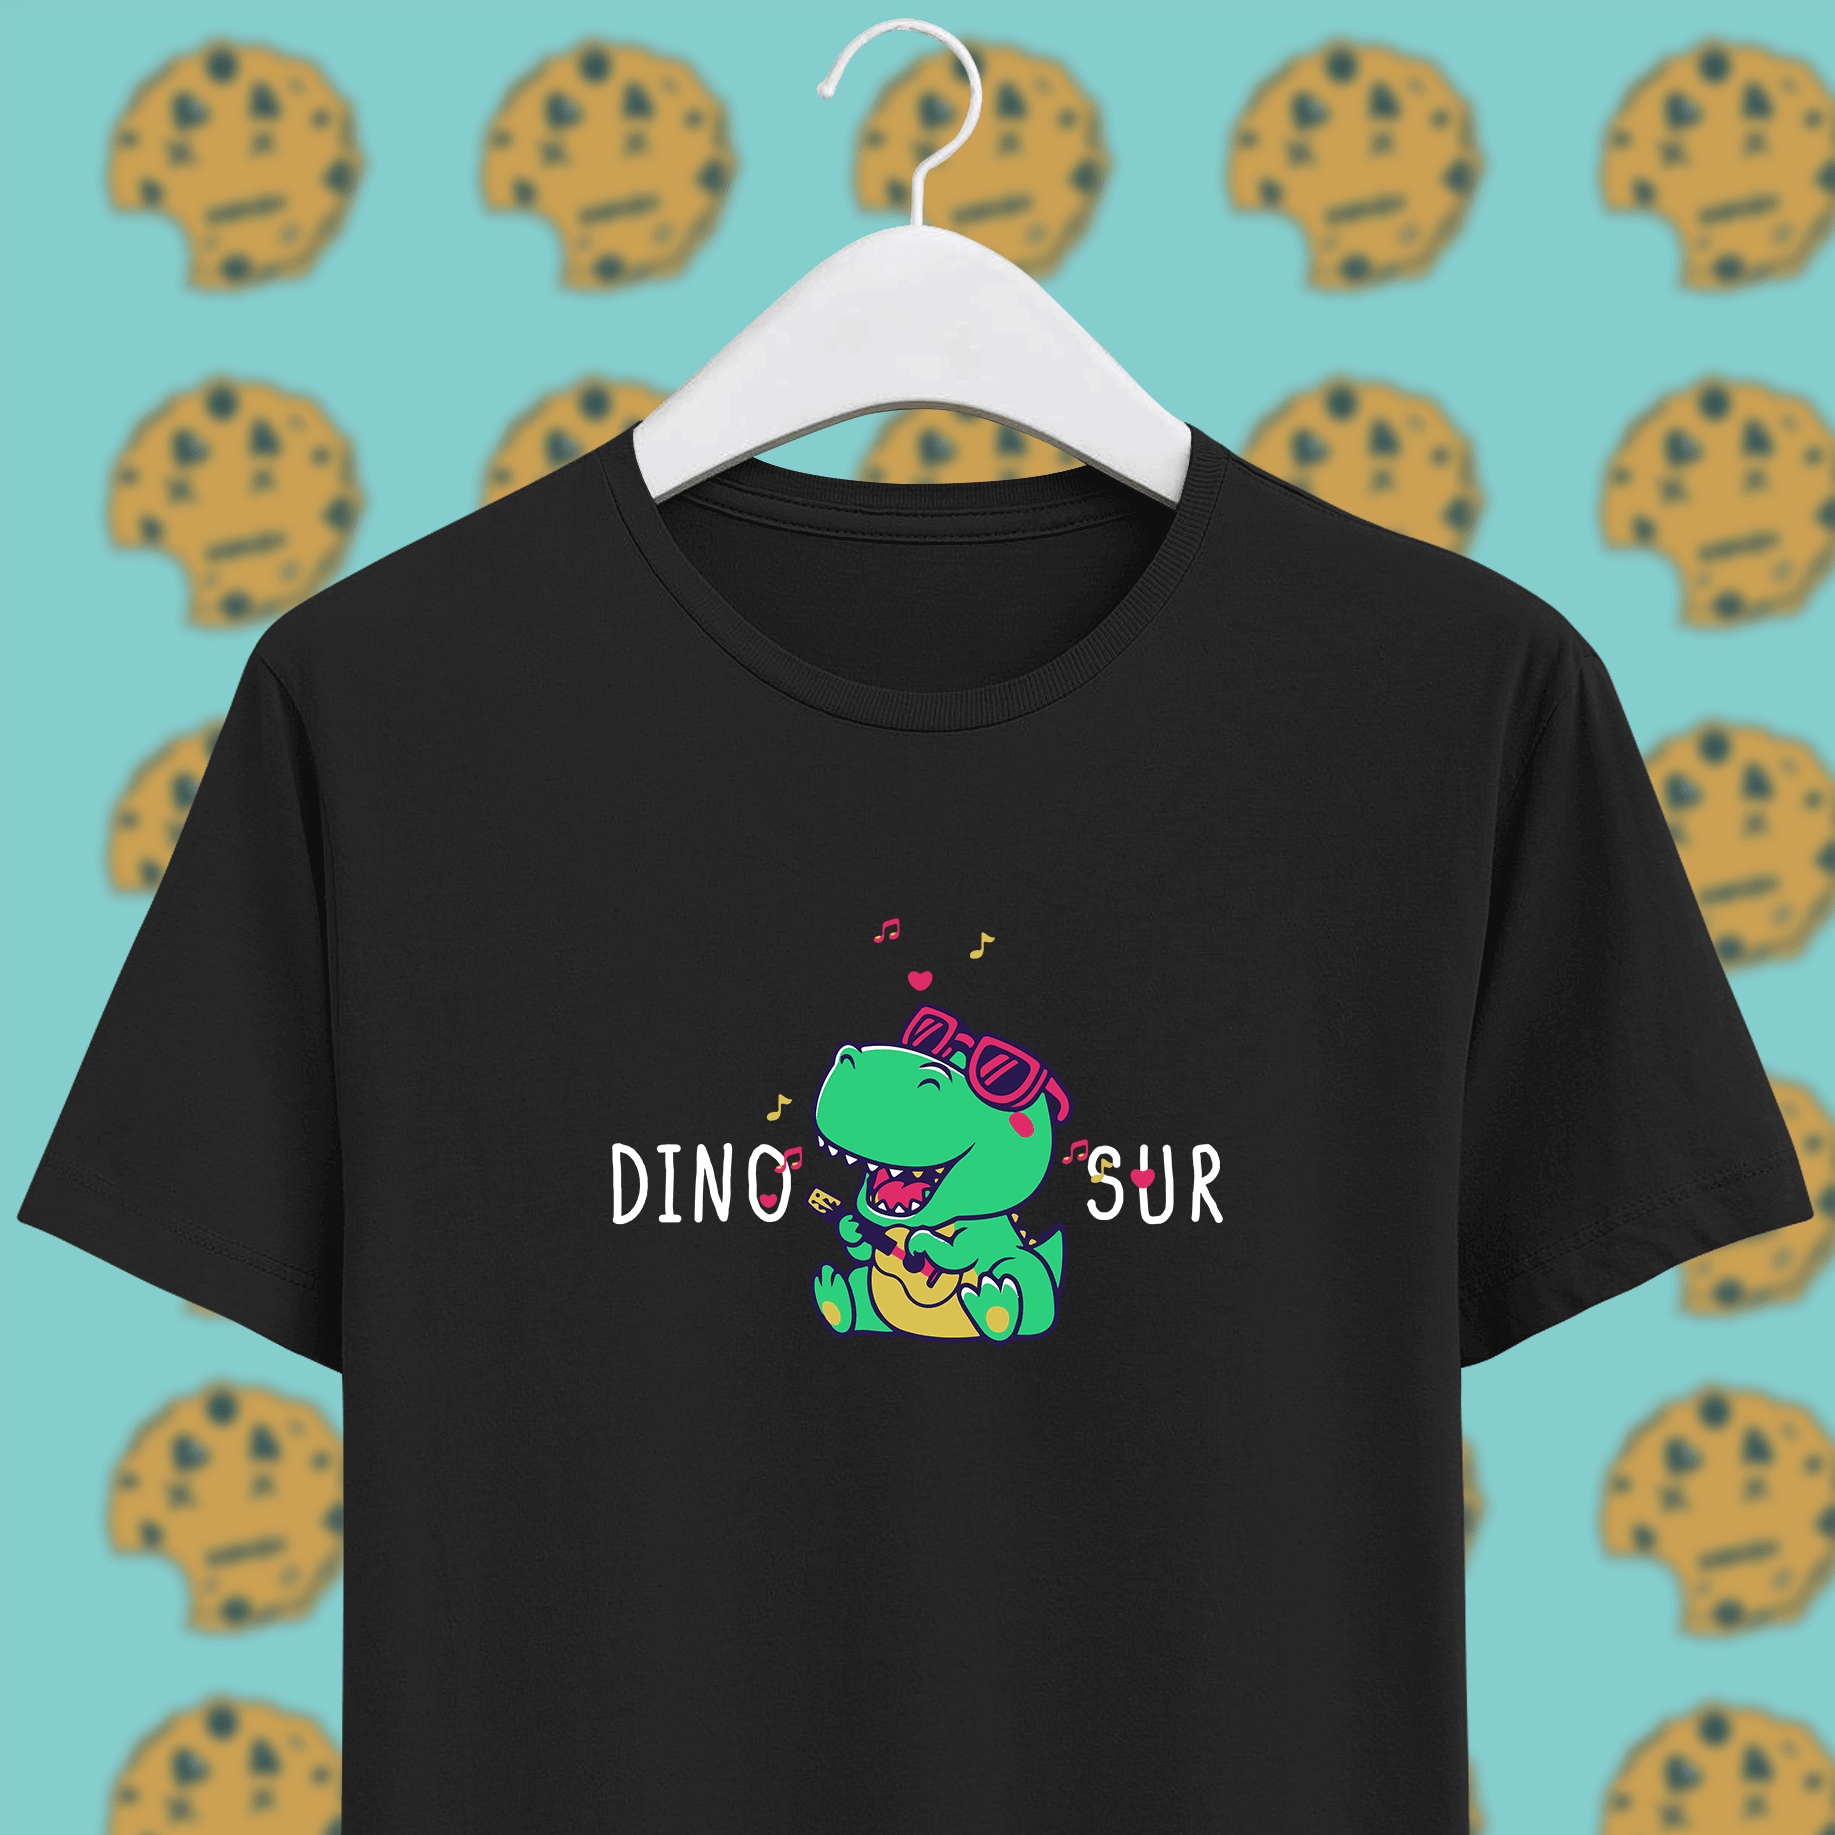 singing dinosaur on black unisex cotton t-shirt, funny pun 